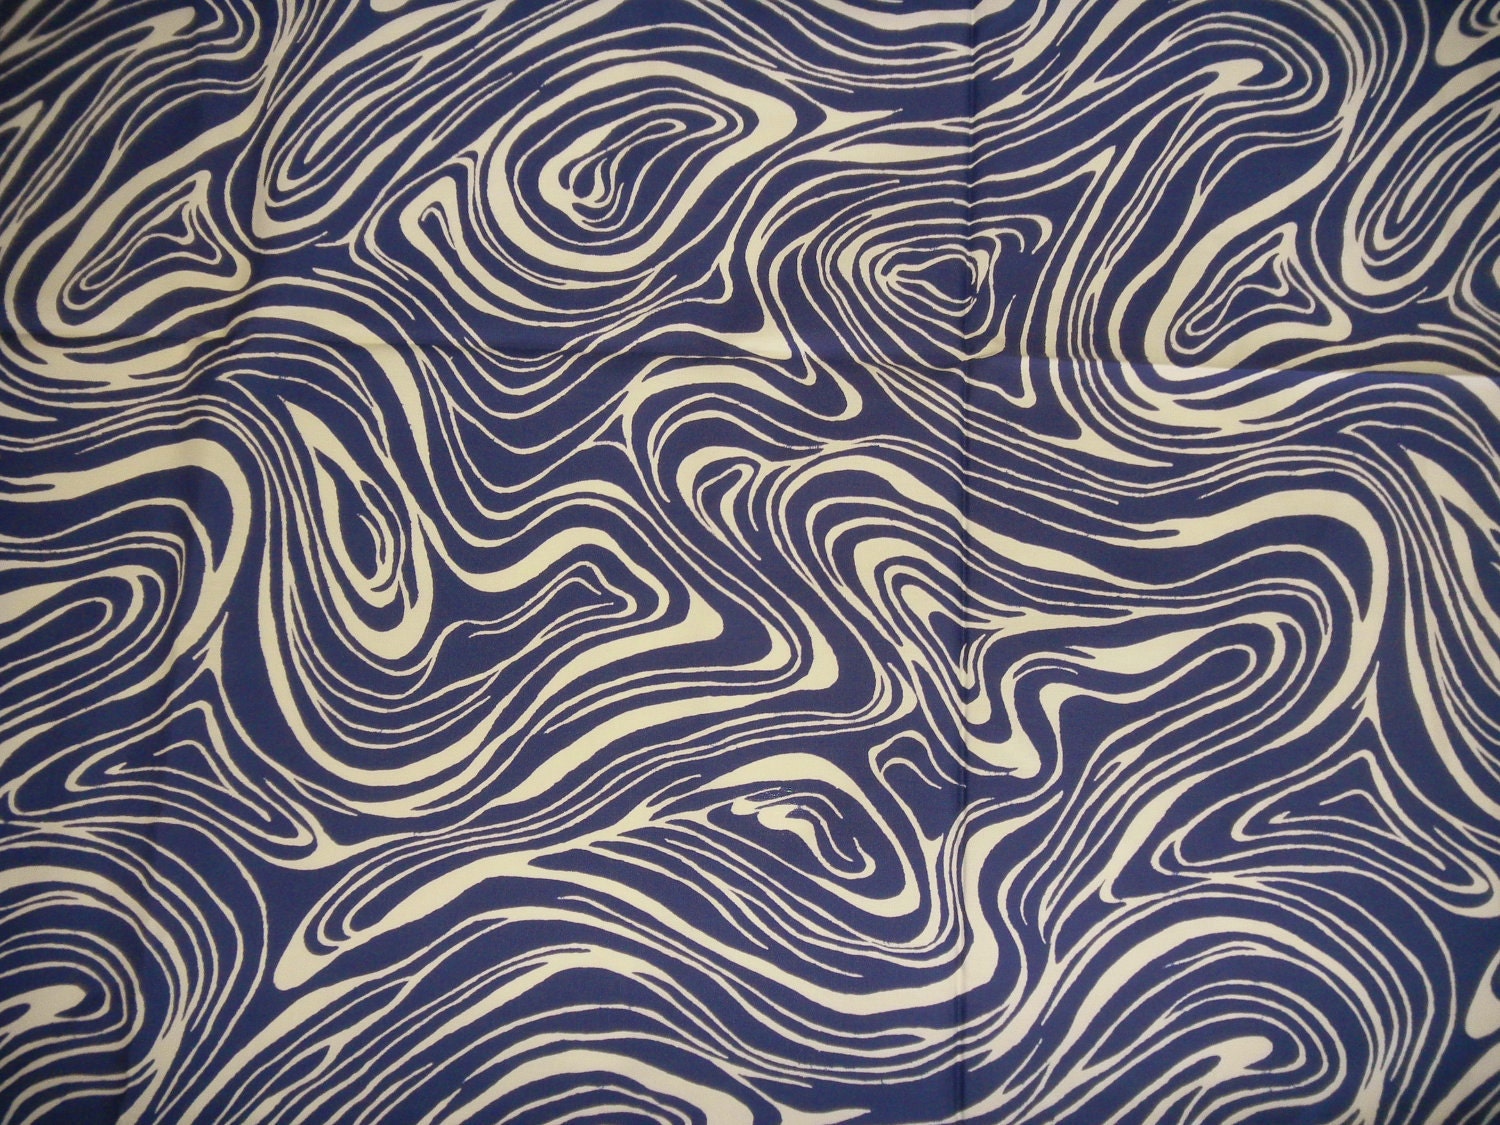 Vintage Trippy Swirly Psychedelic Fabric in Indigo Violet